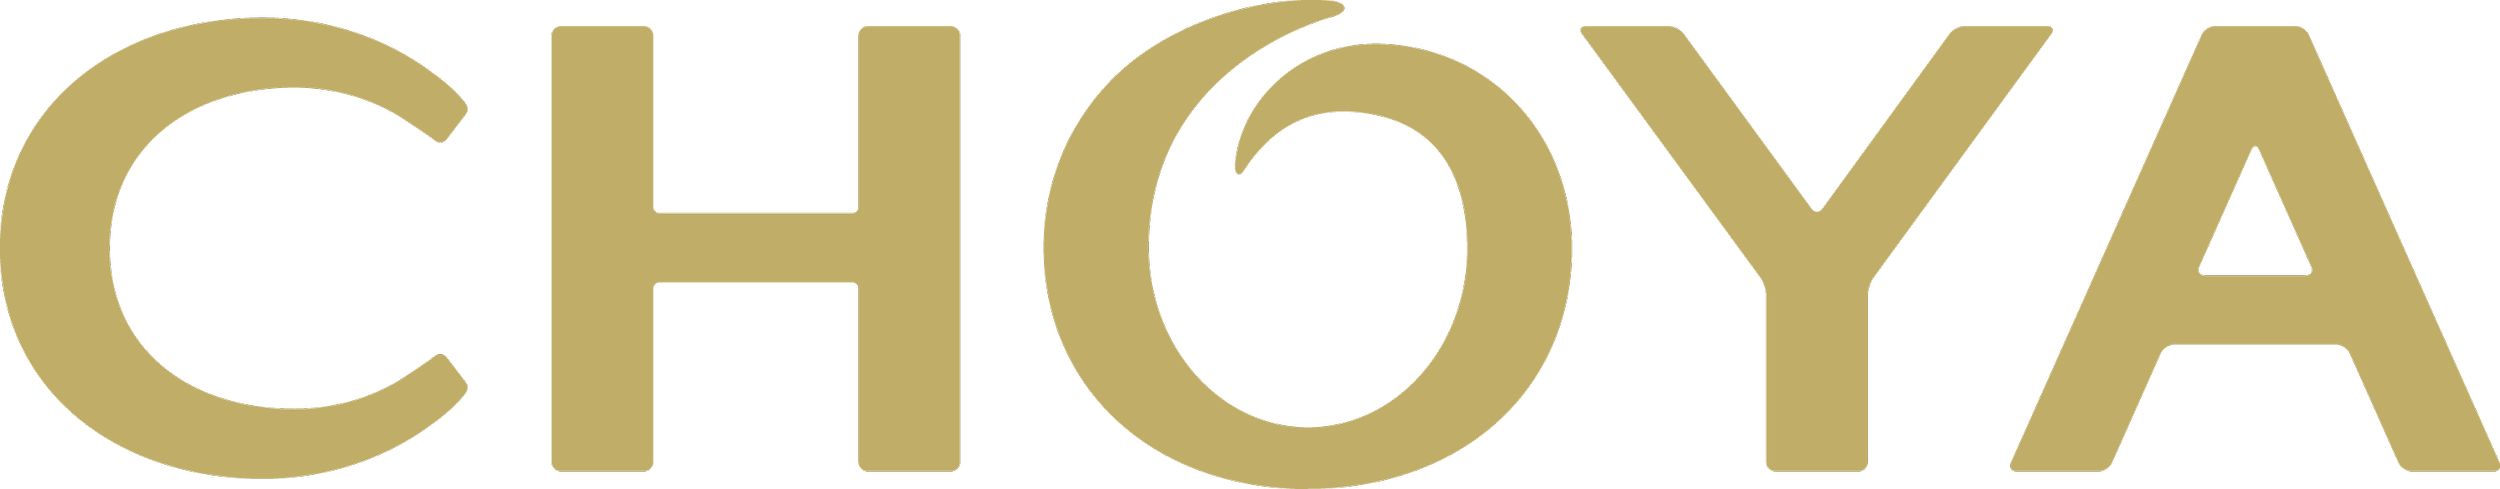 CHOYA logo gold.png